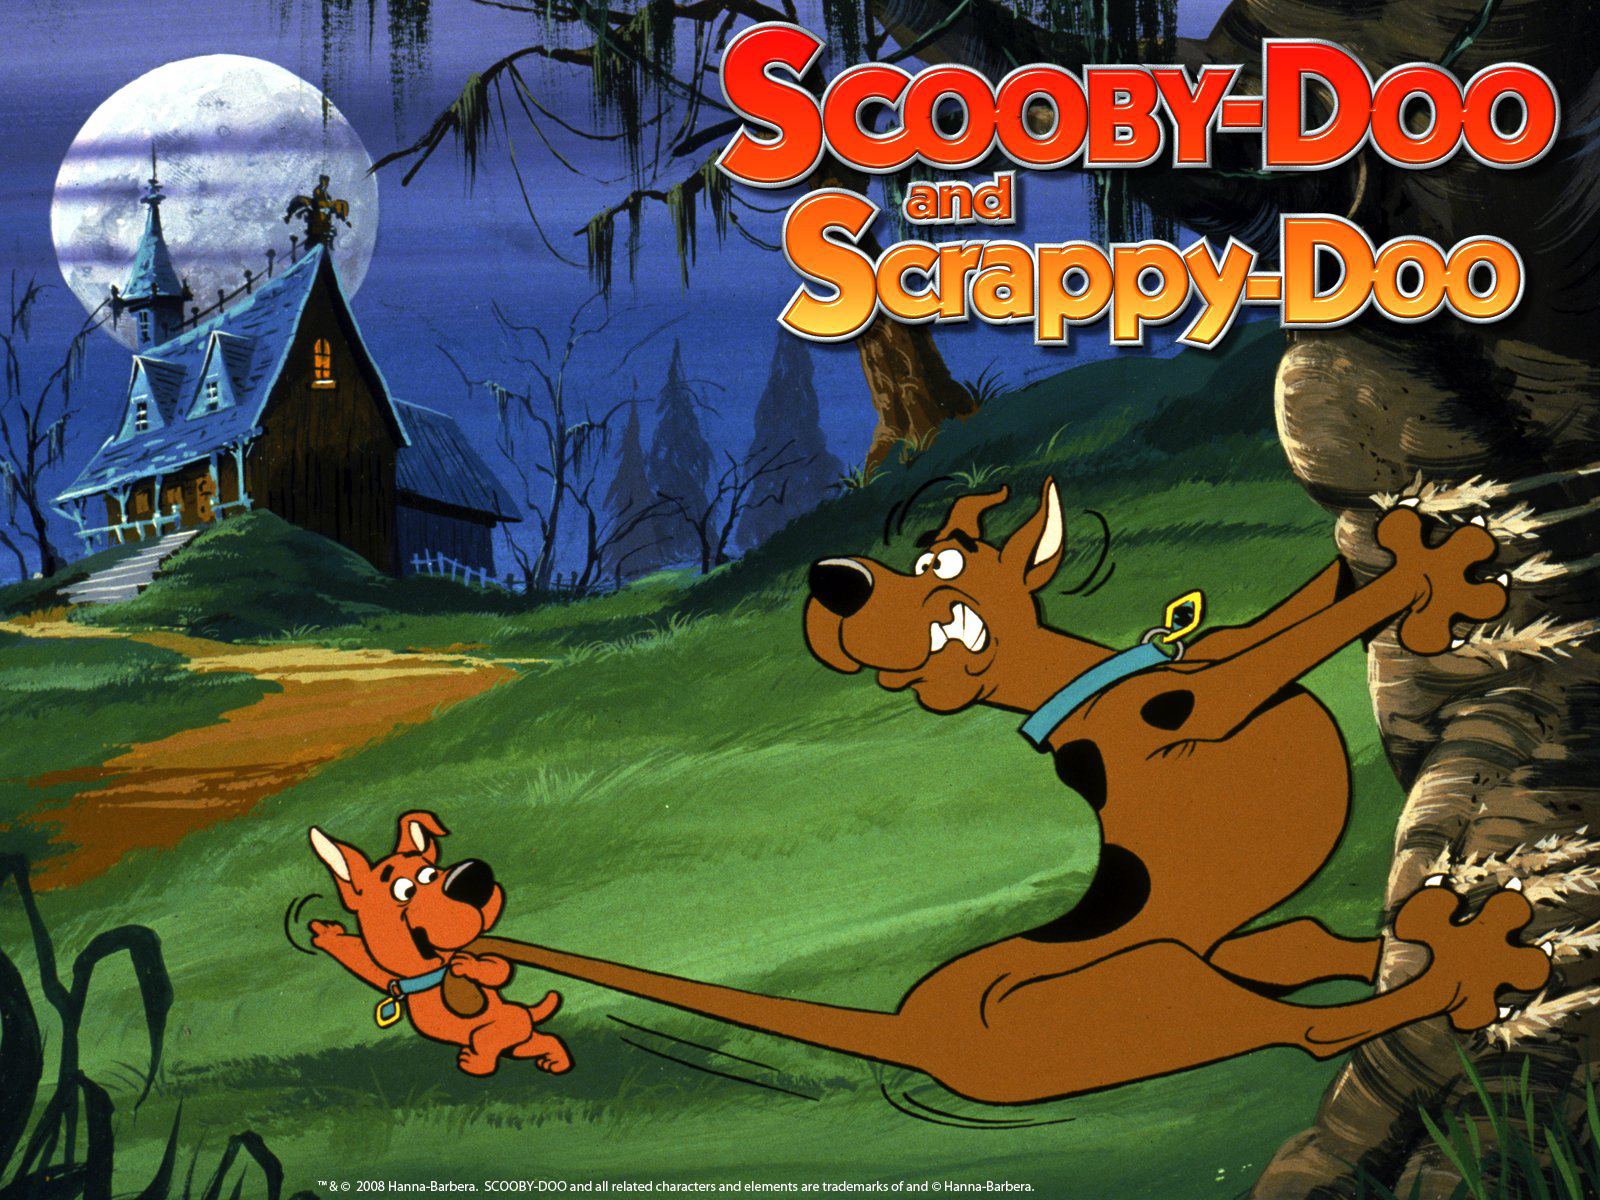 Scooby-Doo and Scrappy-Doo (Phần 4) - Scooby-Doo and Scrappy-Doo (Season 4) (1982)